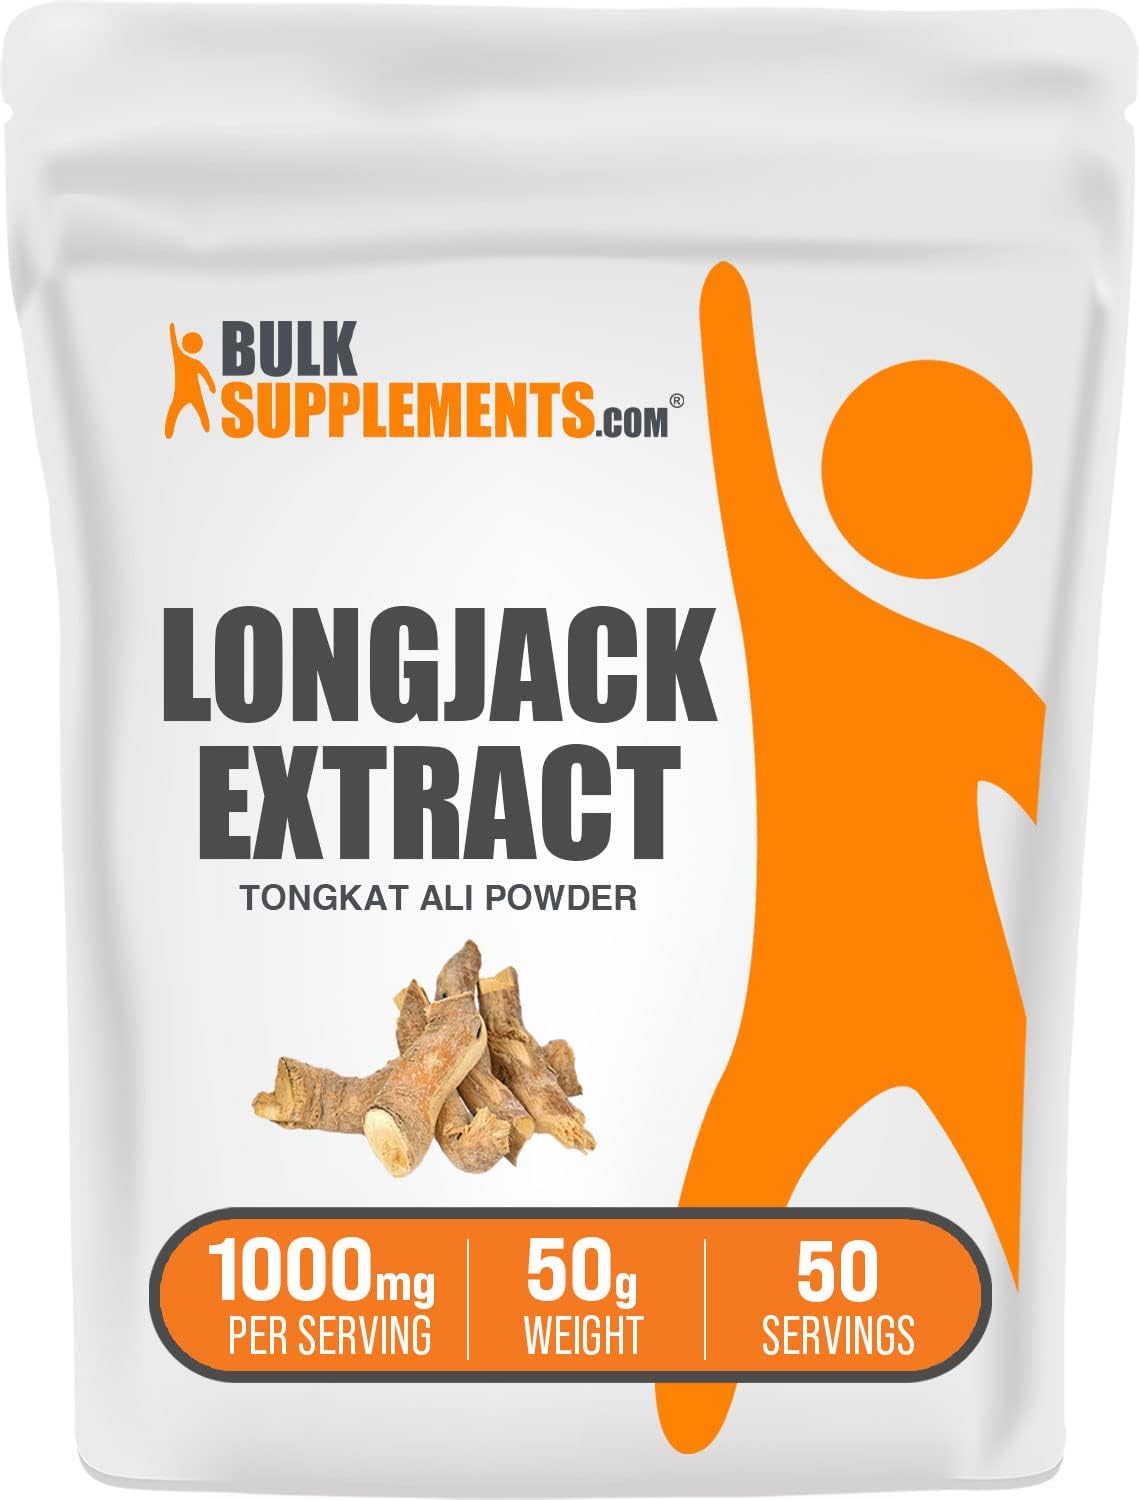 BULKSUPPLEMENTS.COM Longjack Extract Powder - Tongkat Ali Extract, Longjack Tongkat Ali Powder - Tongkat Ali for Men & Women, Gluten Free - 1000mg per Serving, 50g (1.8 oz) (Pack of 1)